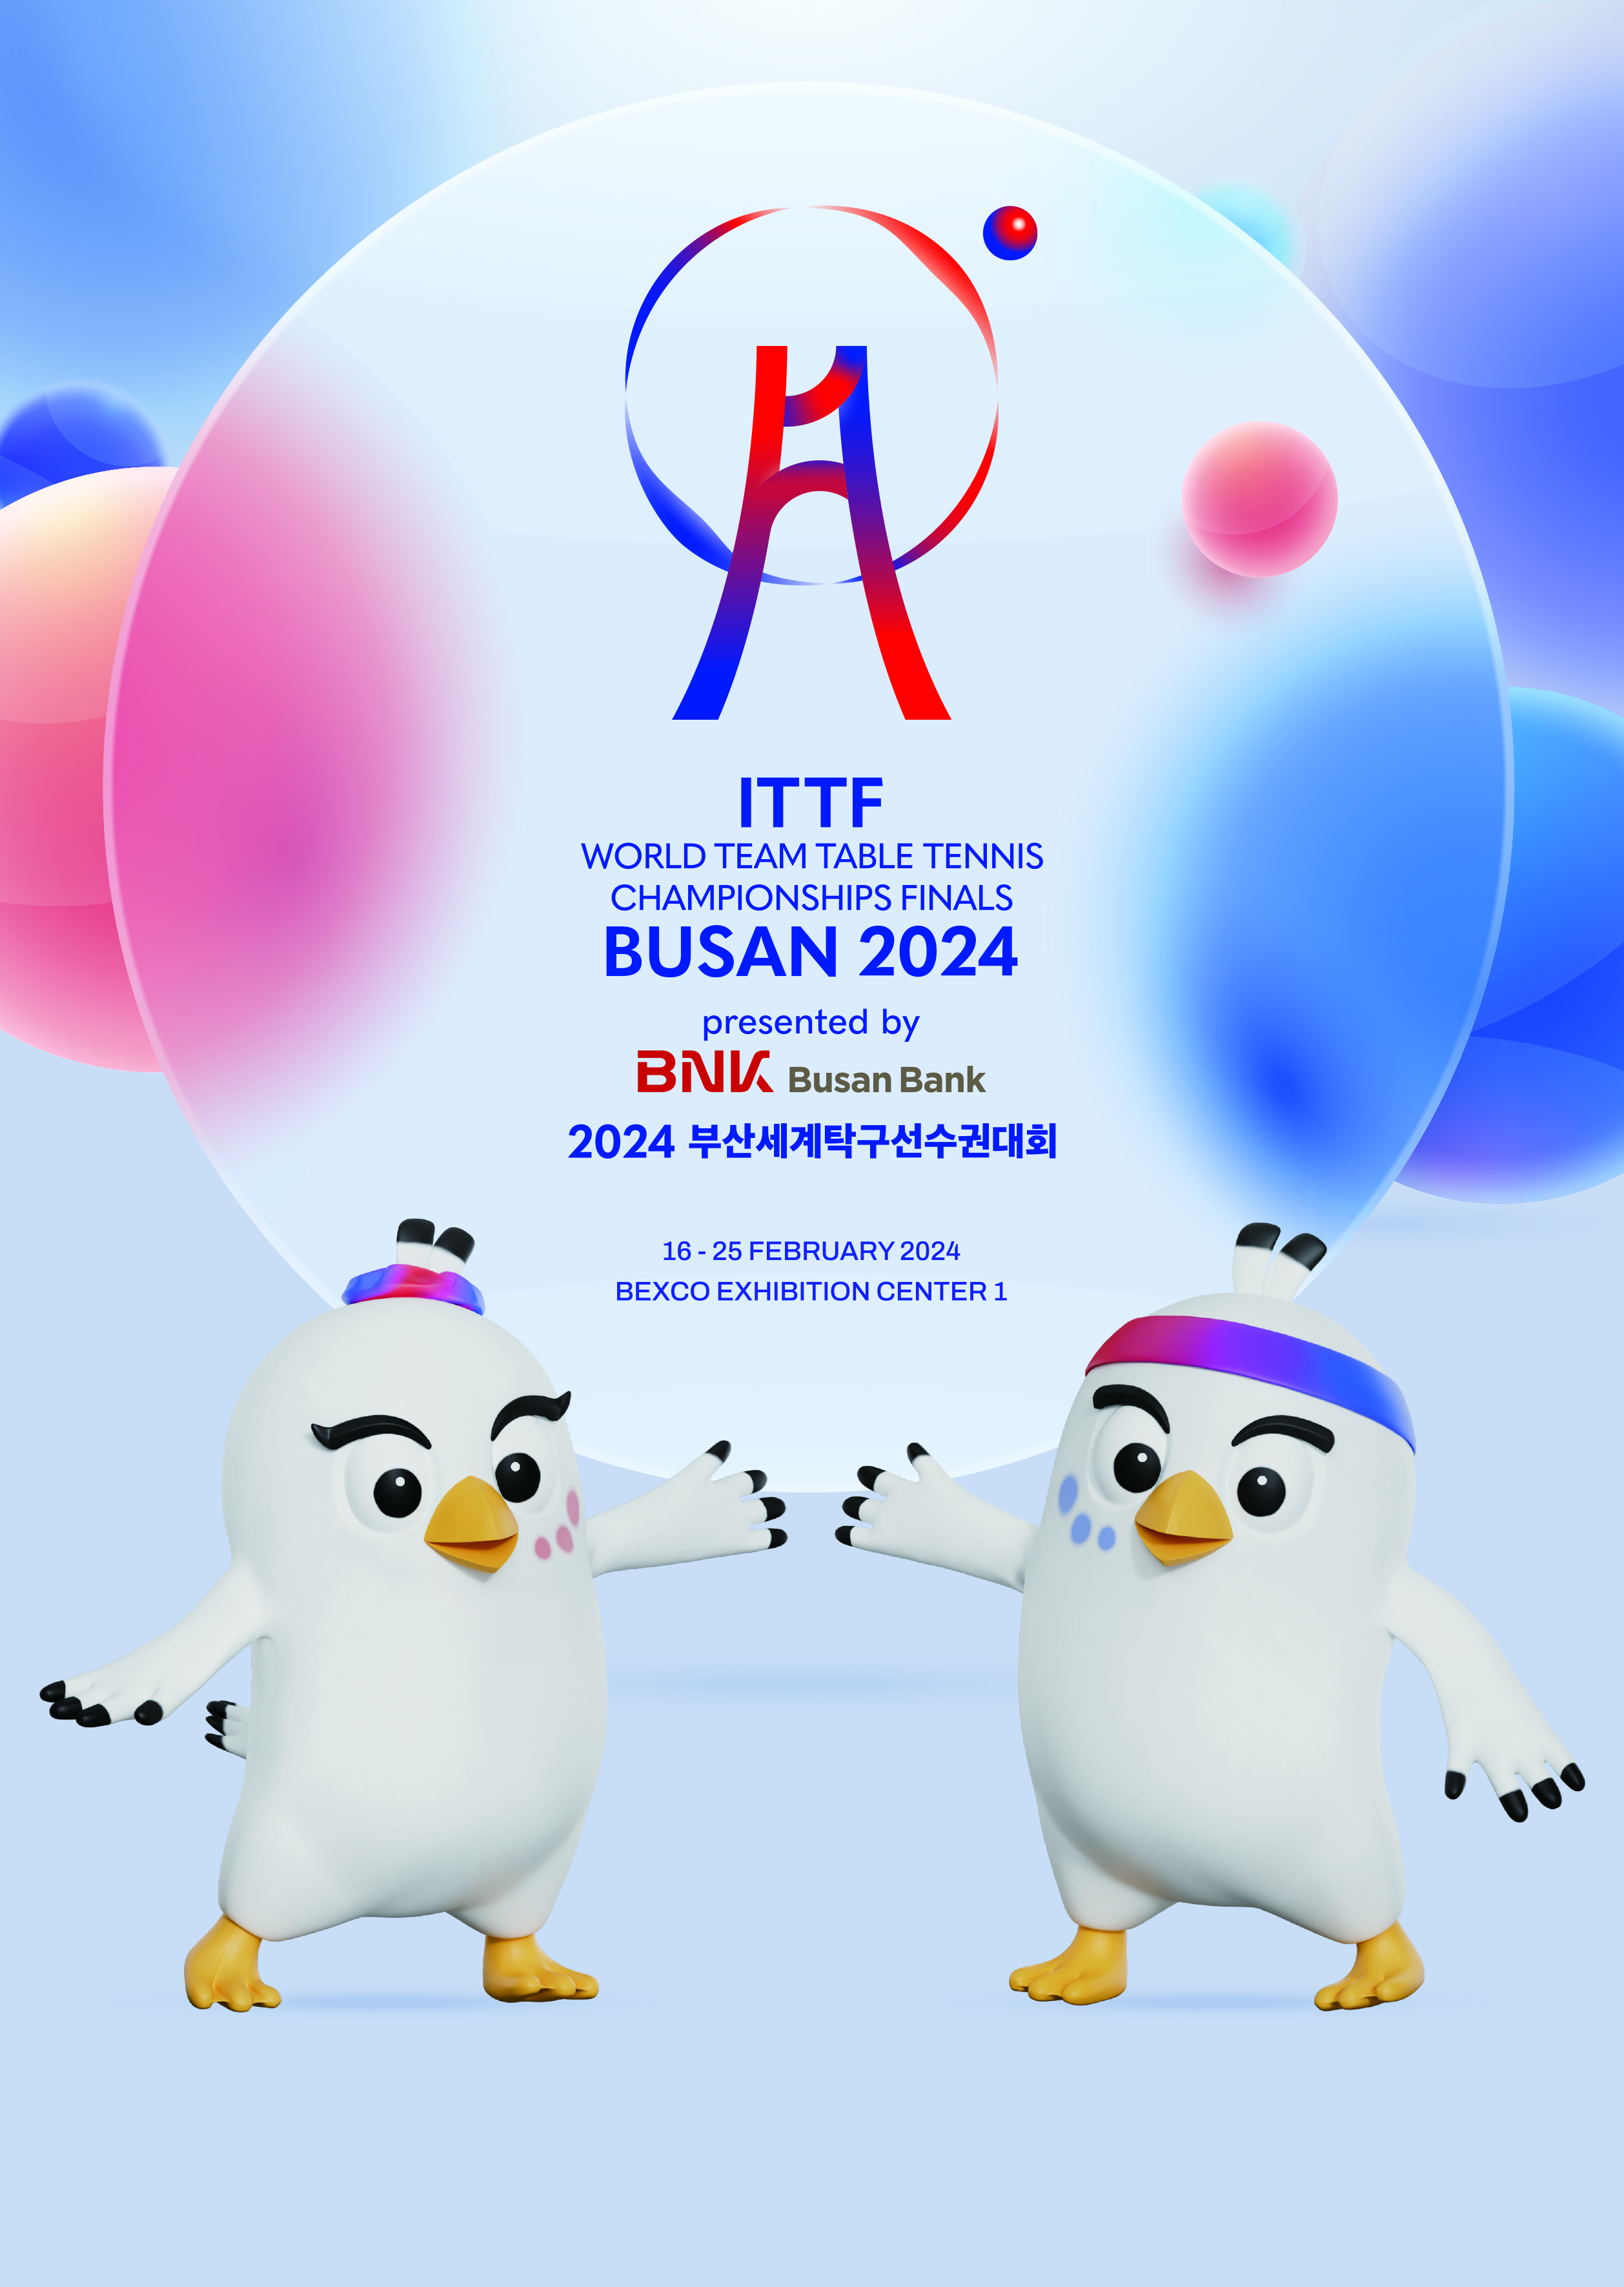 ITTF WORLD TEAM TABLE TENNIS CHAMPIONSHIPS FINALS BUSAN 2024 presented by BNK Busan Bank 